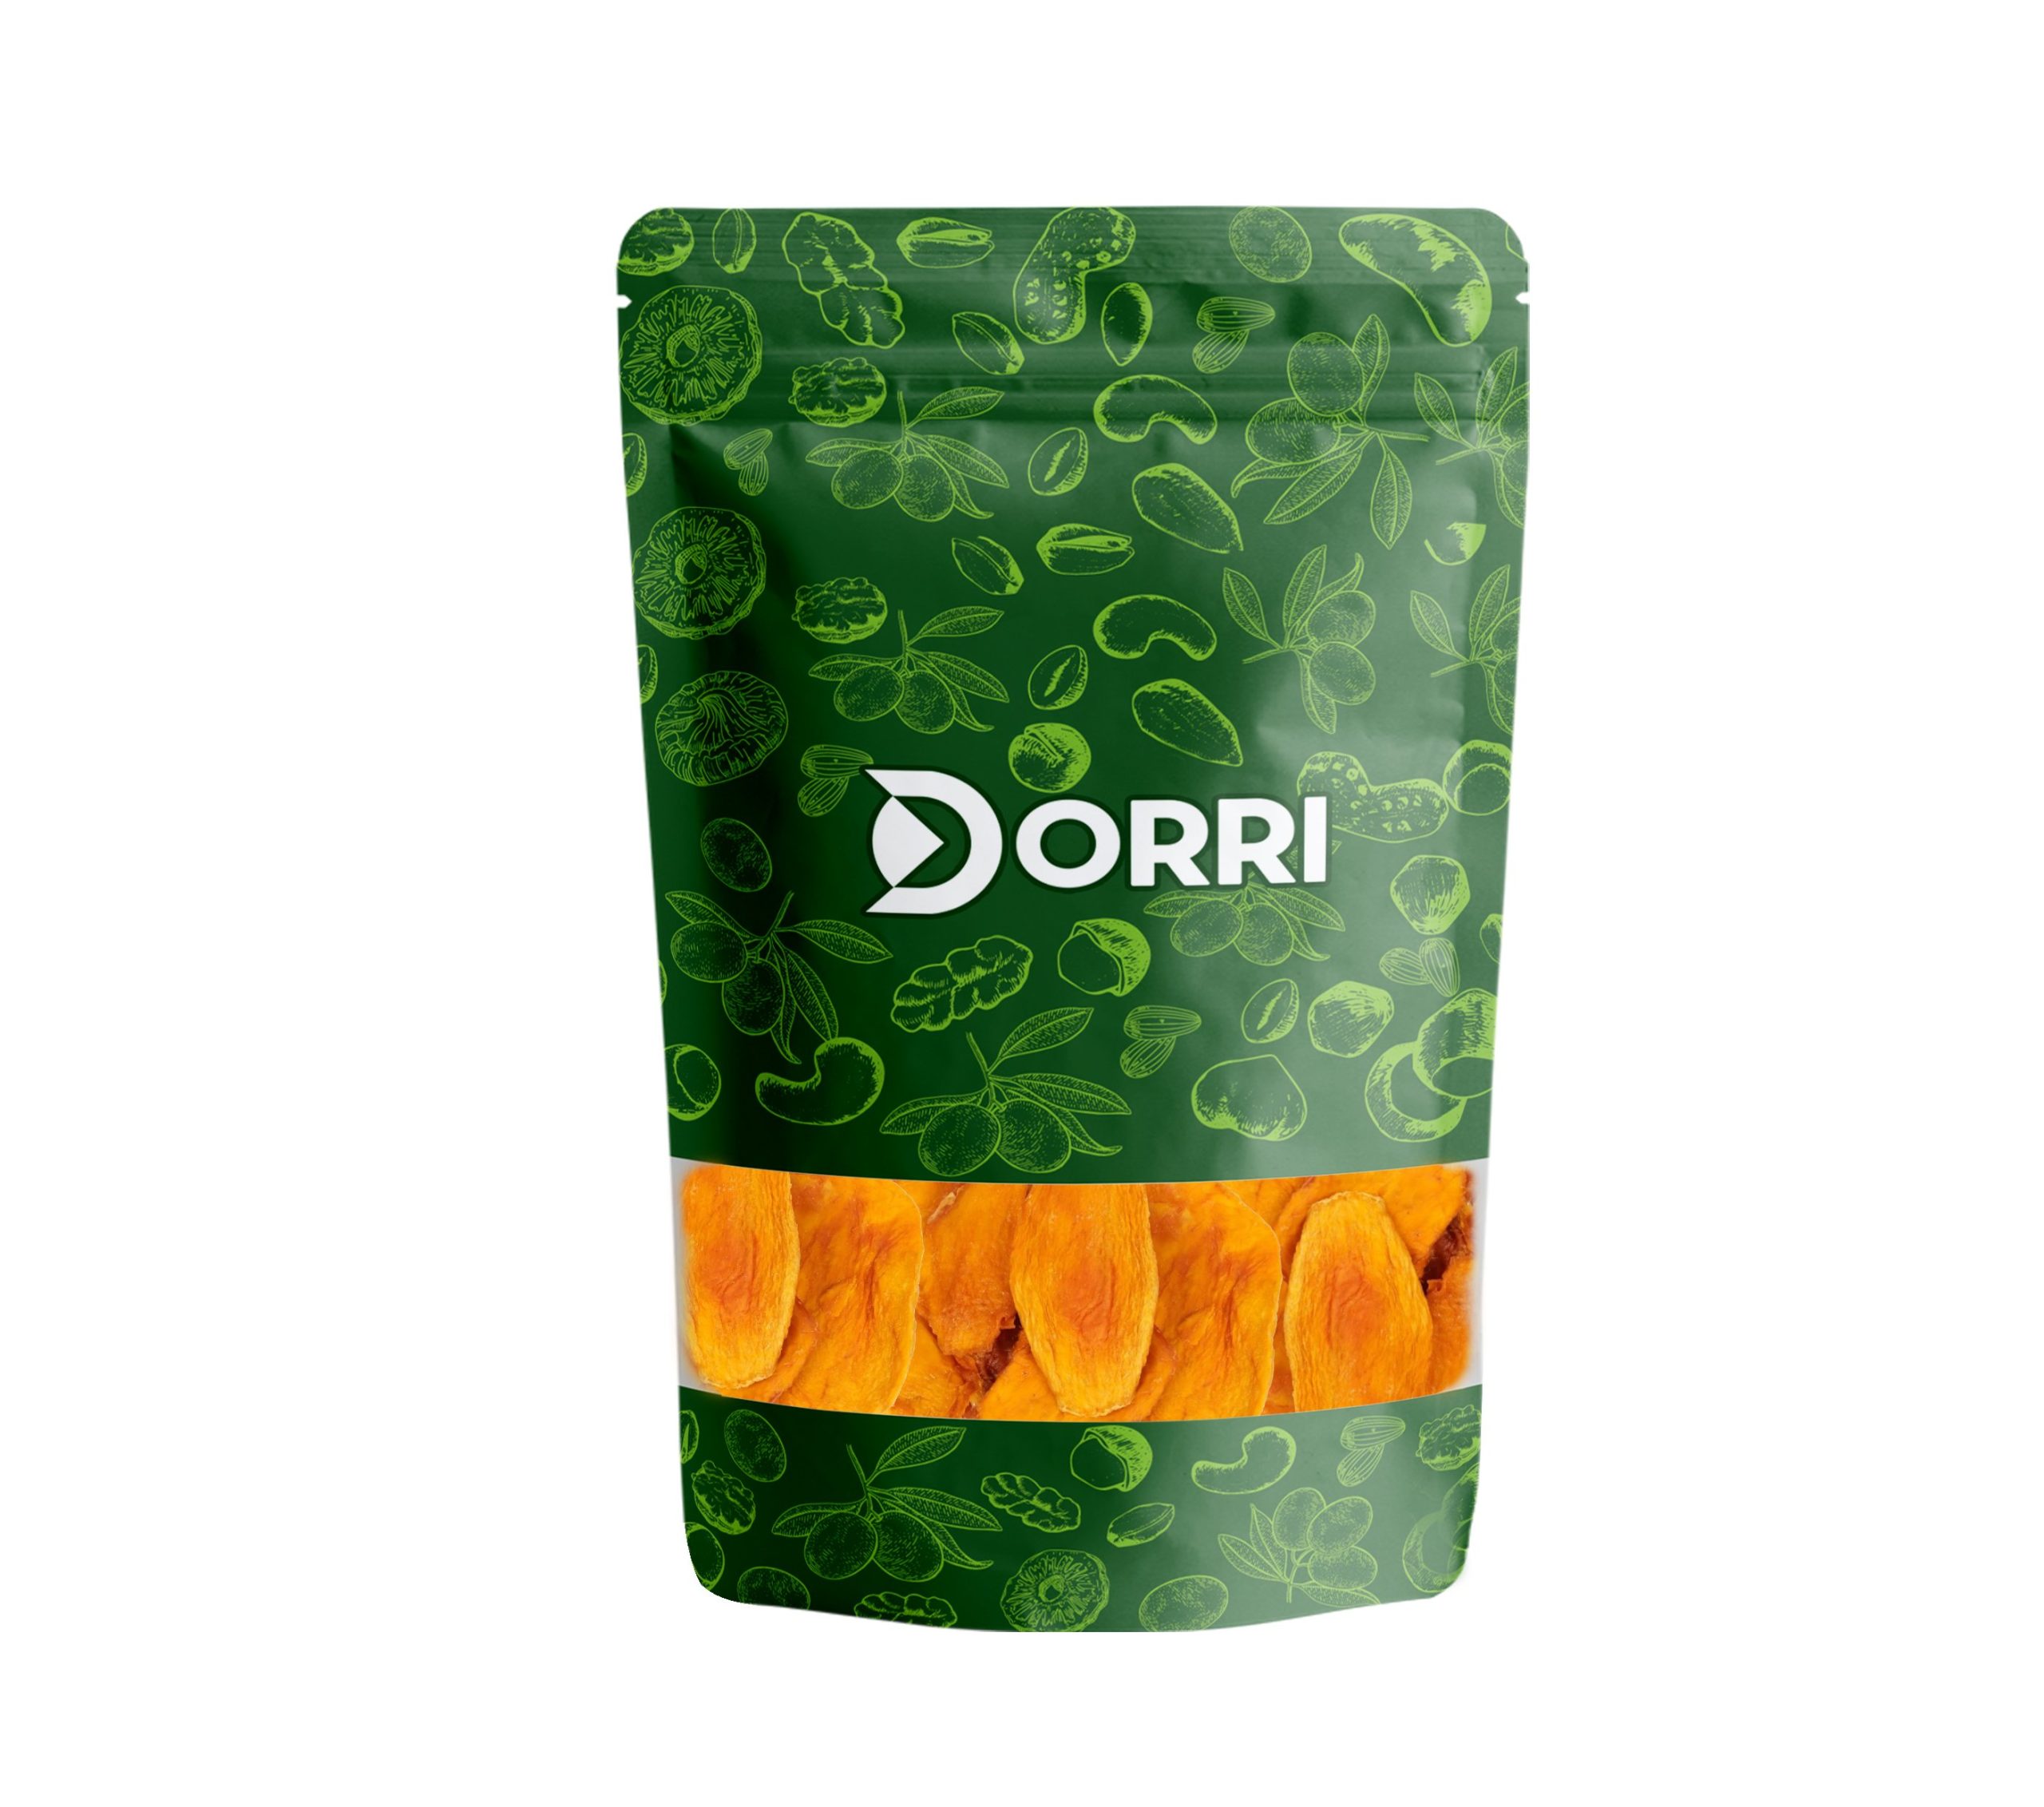 Dorri - Organic Dried Mango